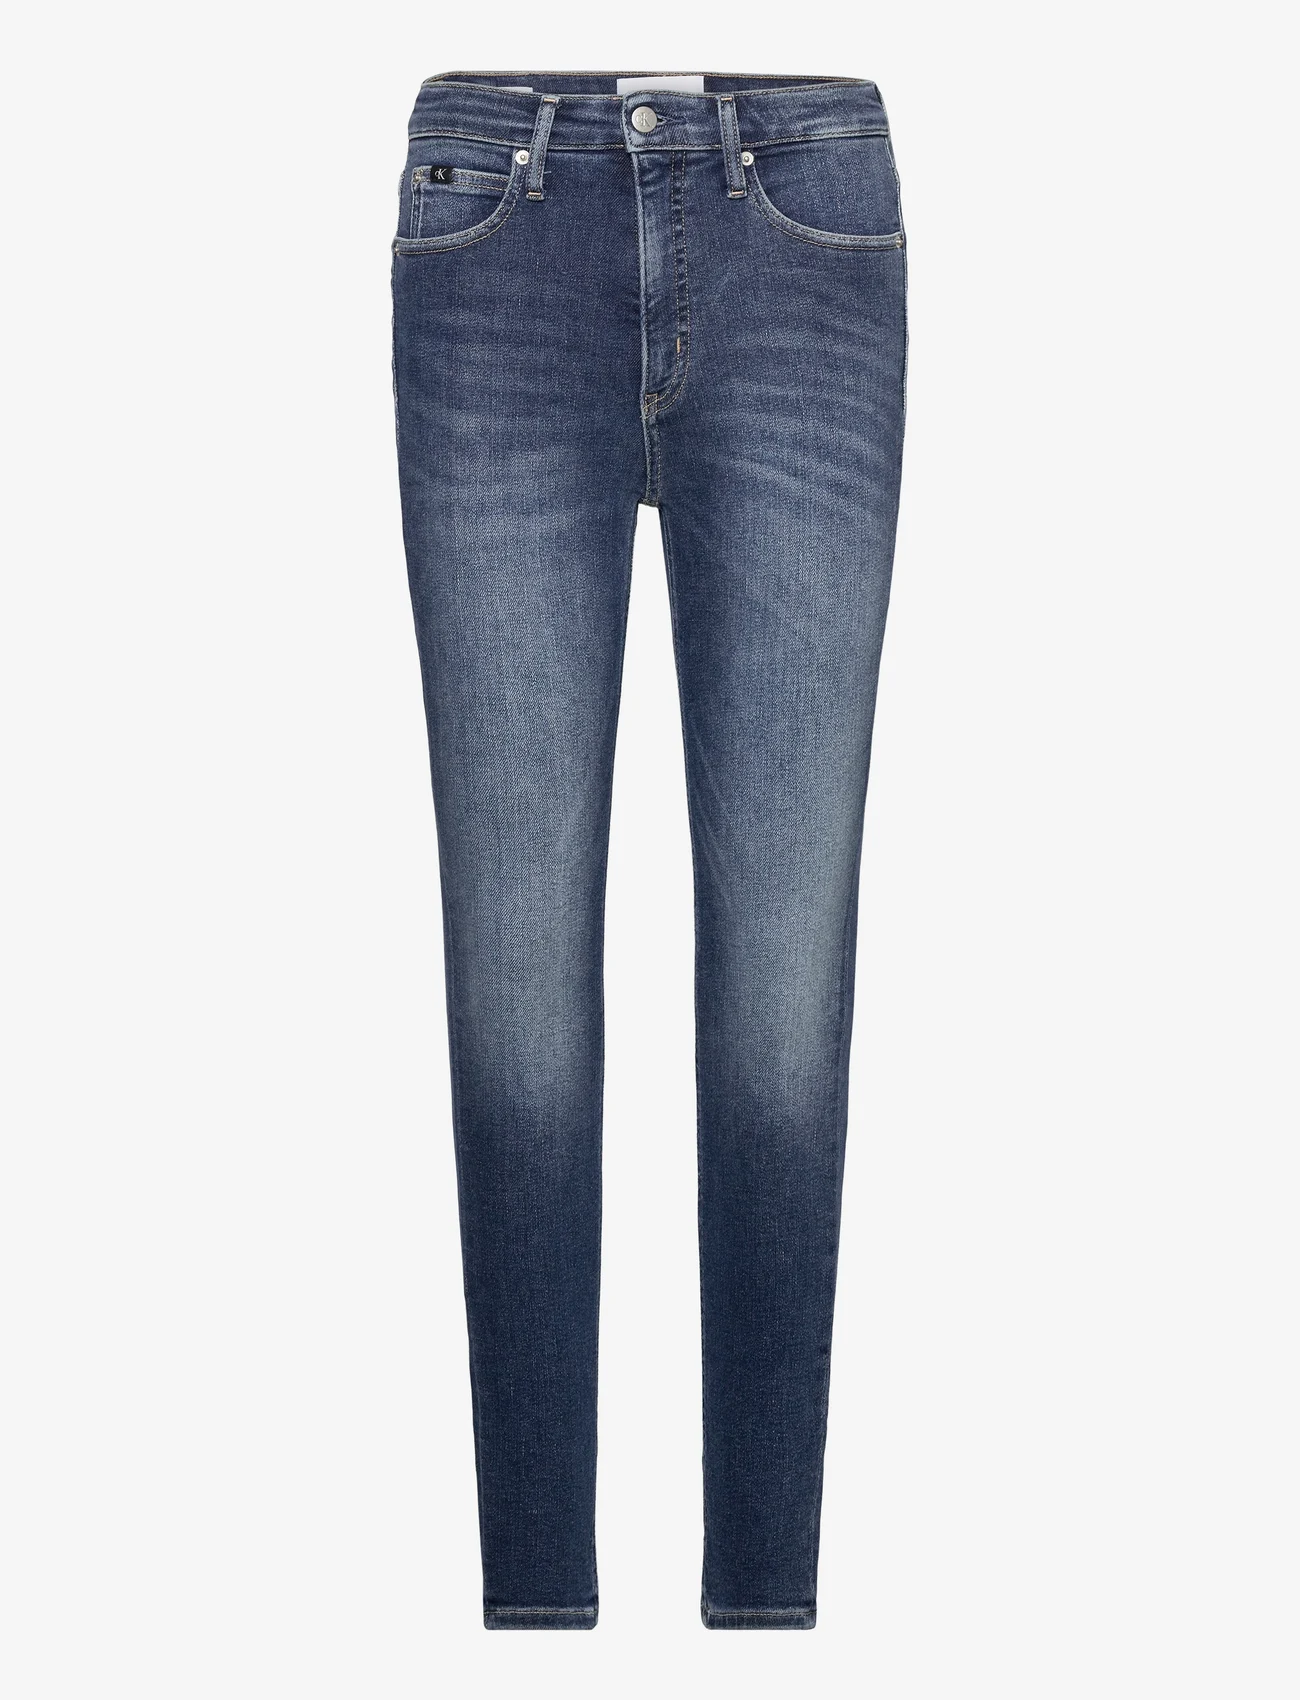 Calvin Klein Jeans - HIGH RISE SKINNY - skinny jeans - denim dark - 0